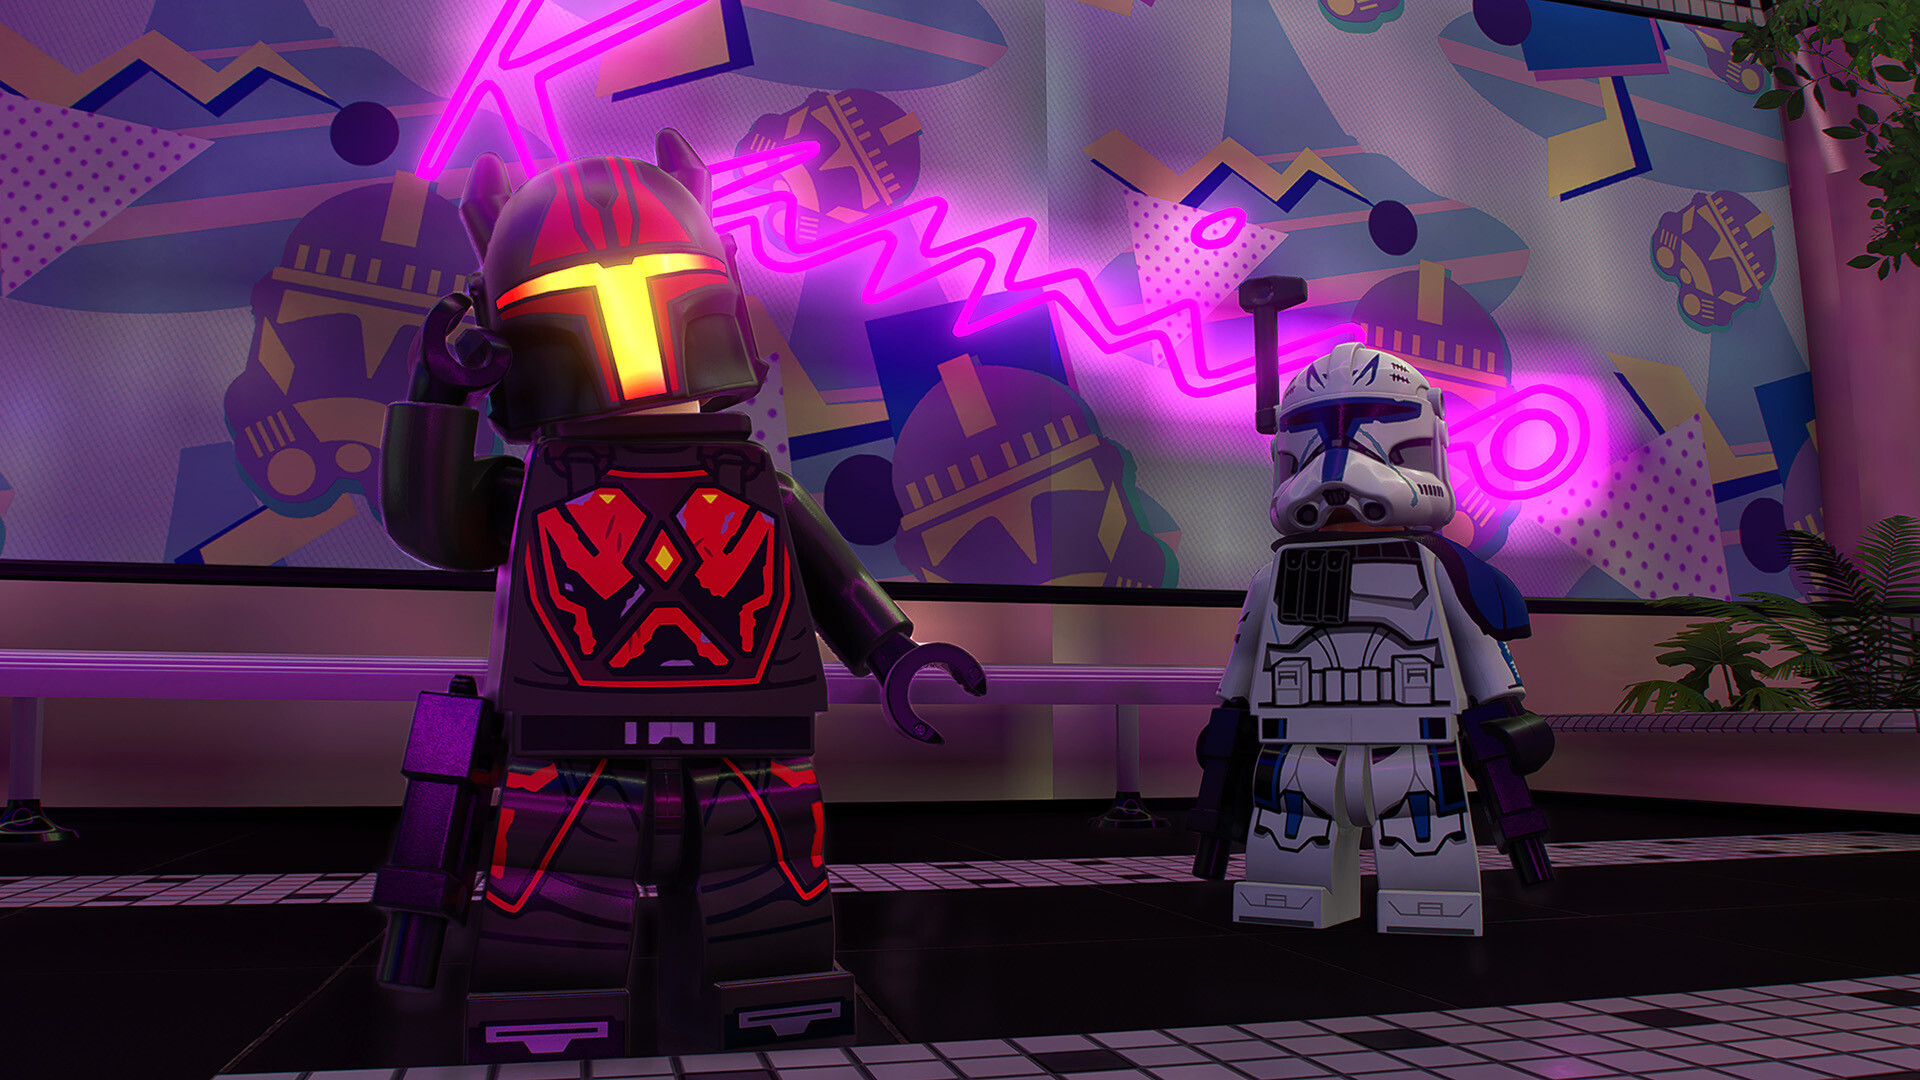 Acheter LEGO® Star Wars™: The Skywalker Saga